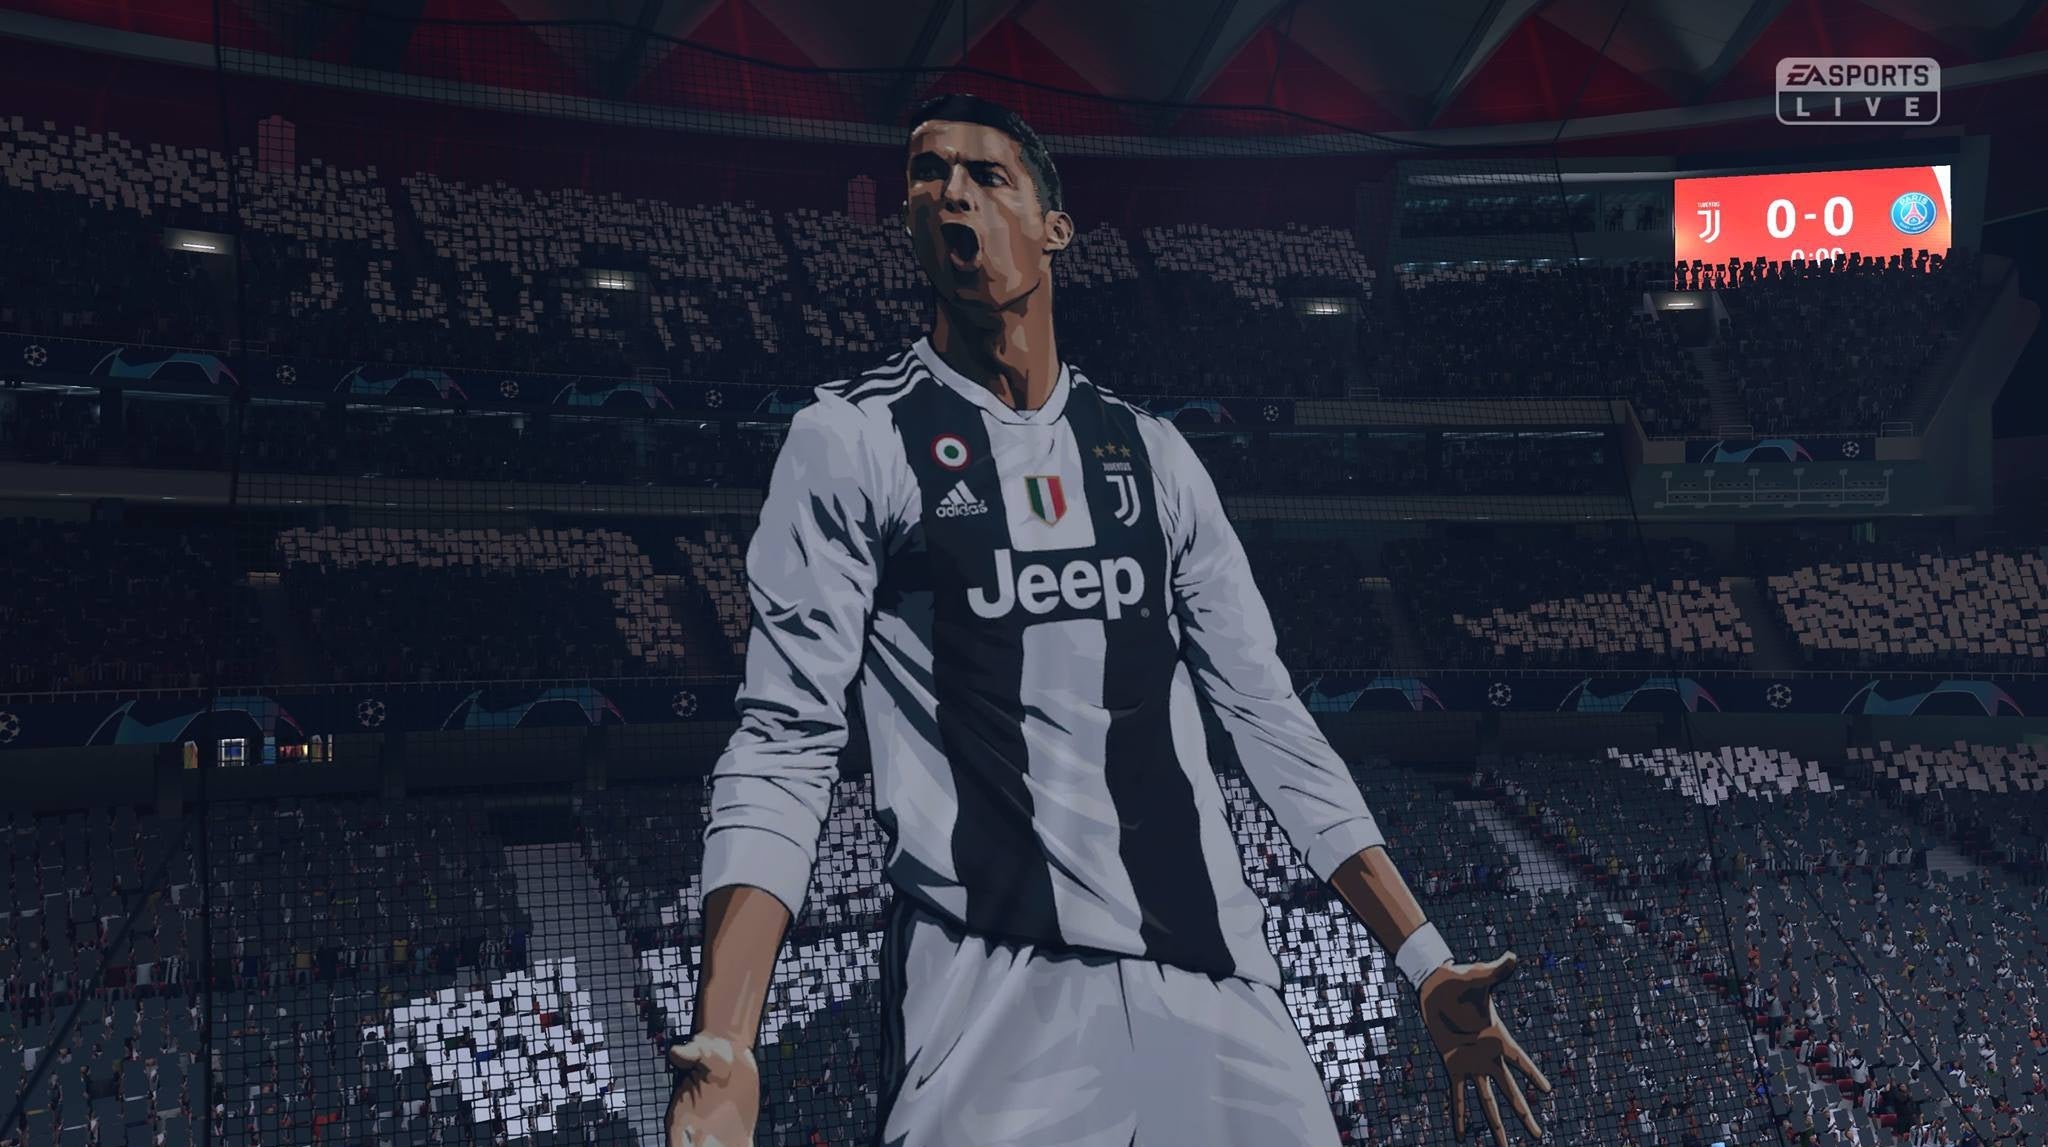 FIFA 19 review - the spectacular, troubling video game modern football deserves - Eurogamer.net